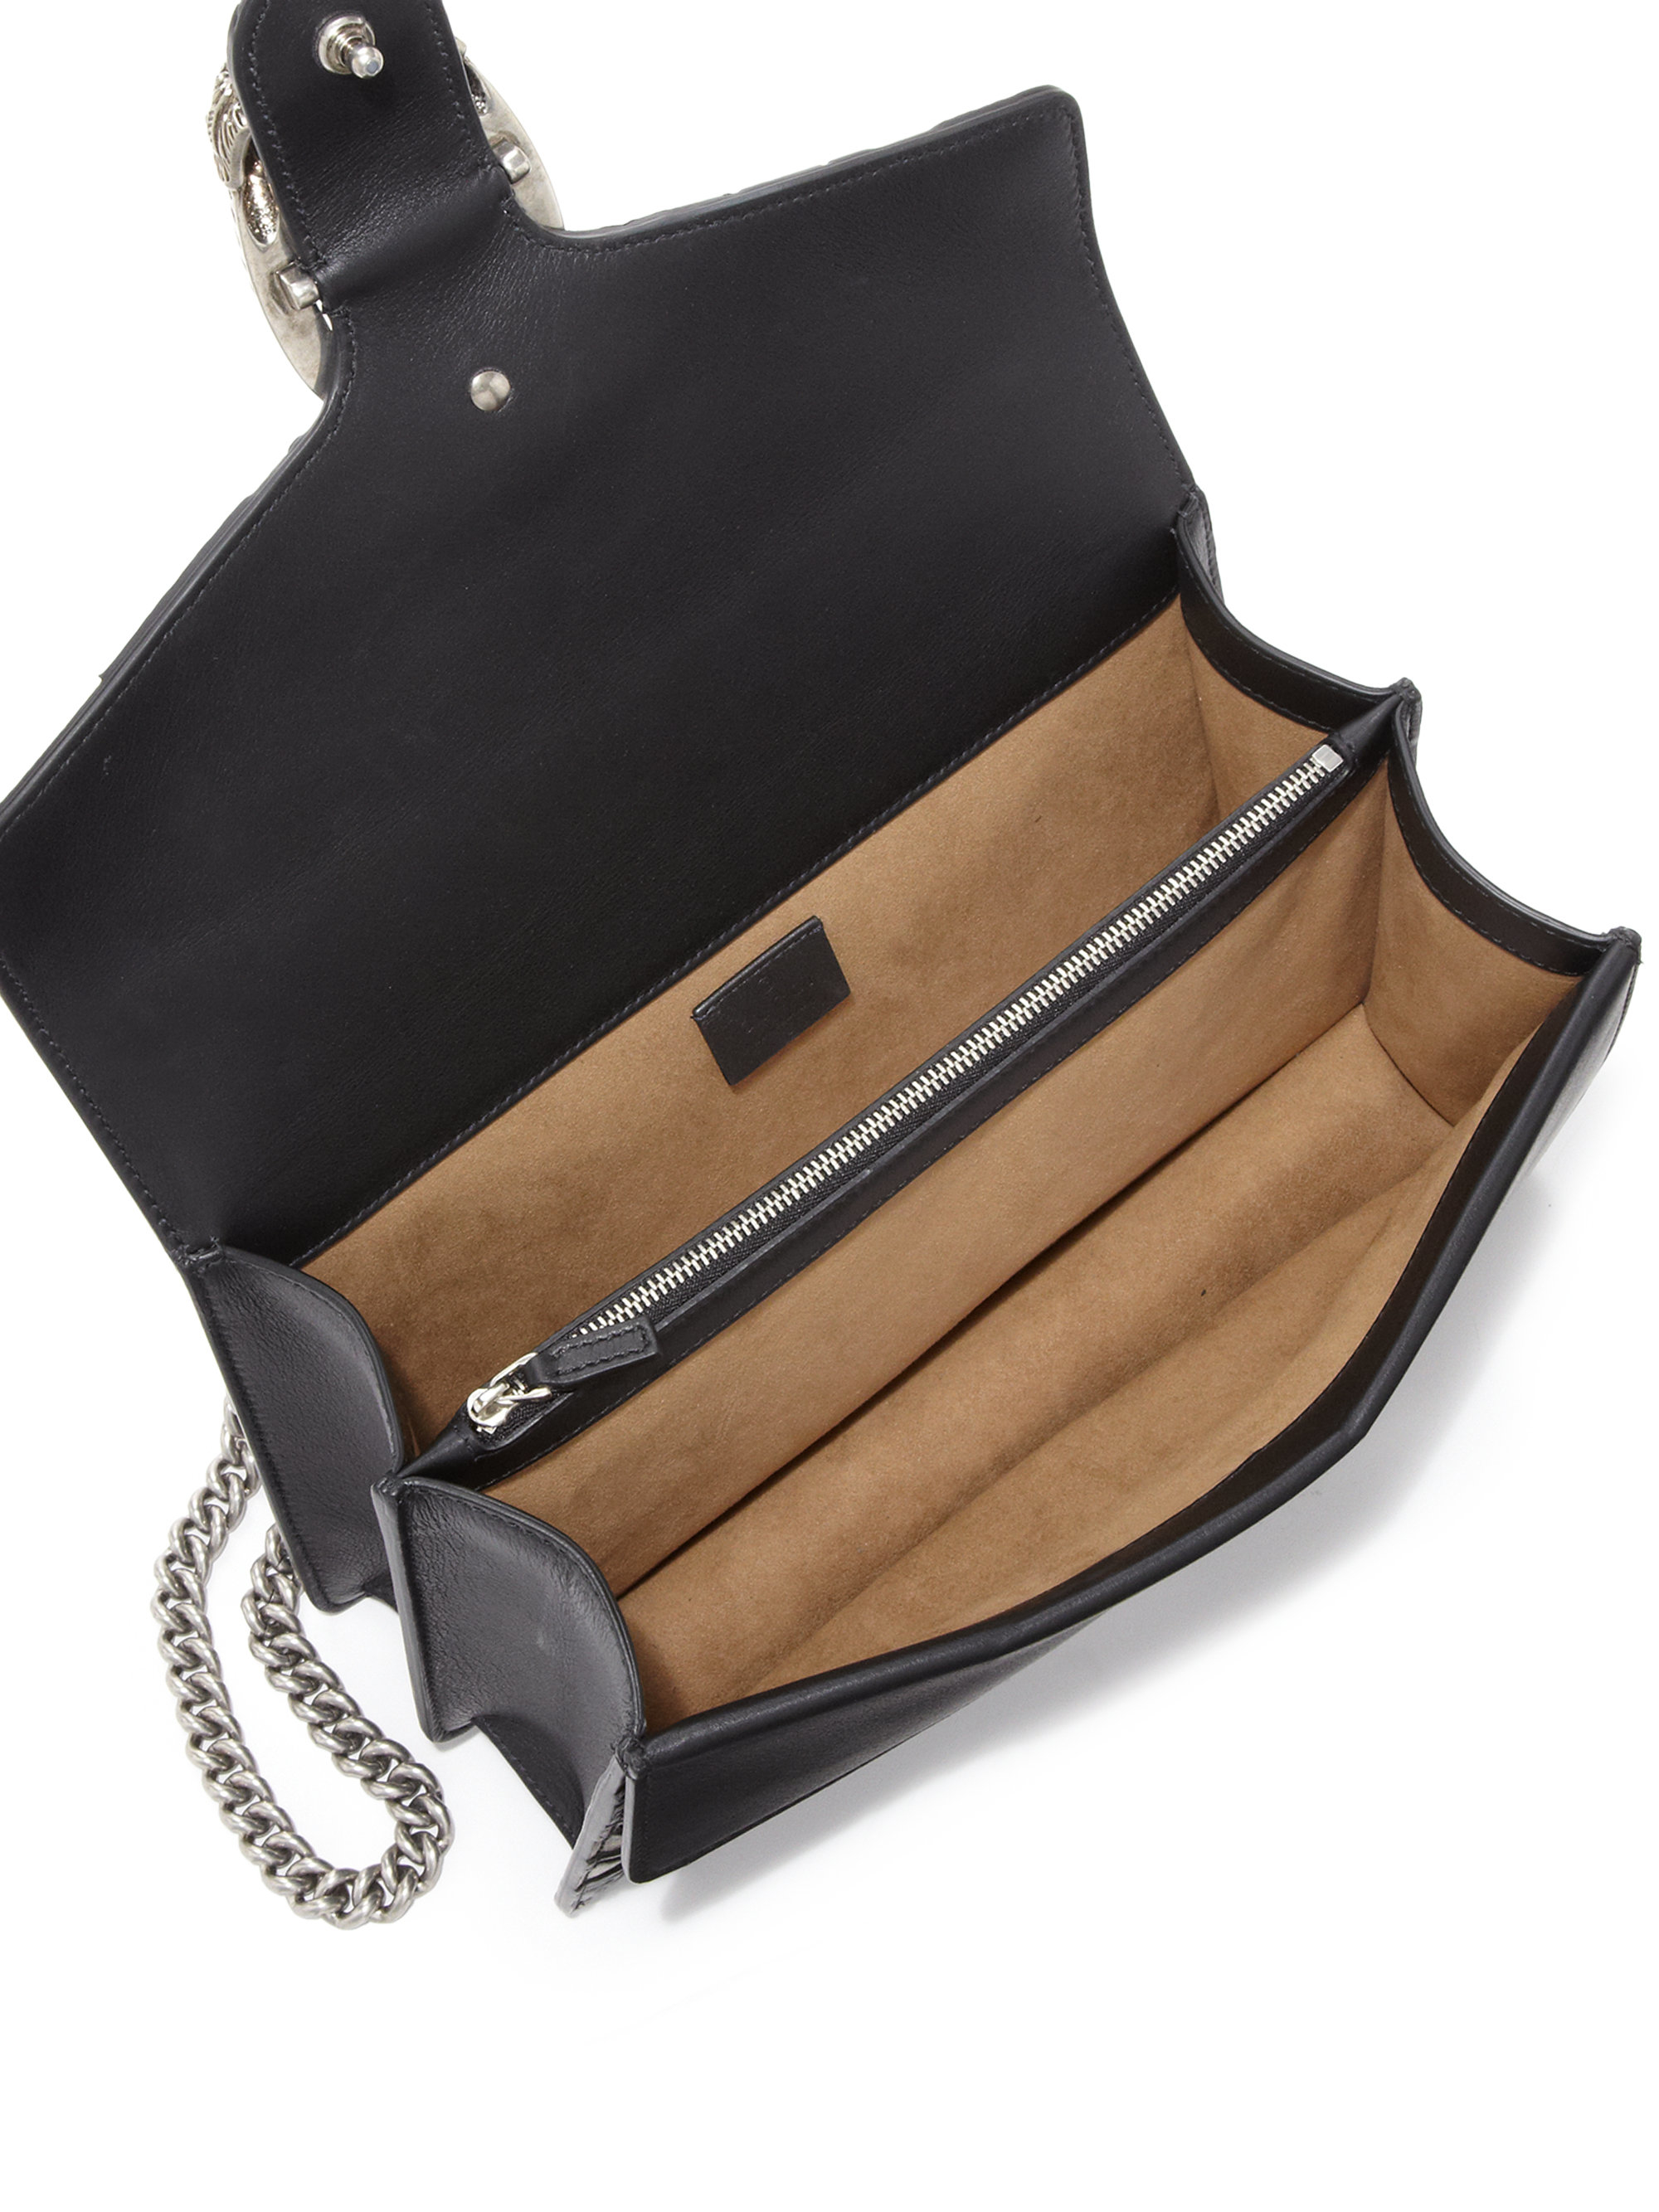 Lyst - Gucci Dionysus Small Arabesque Shoulder Bag in Black